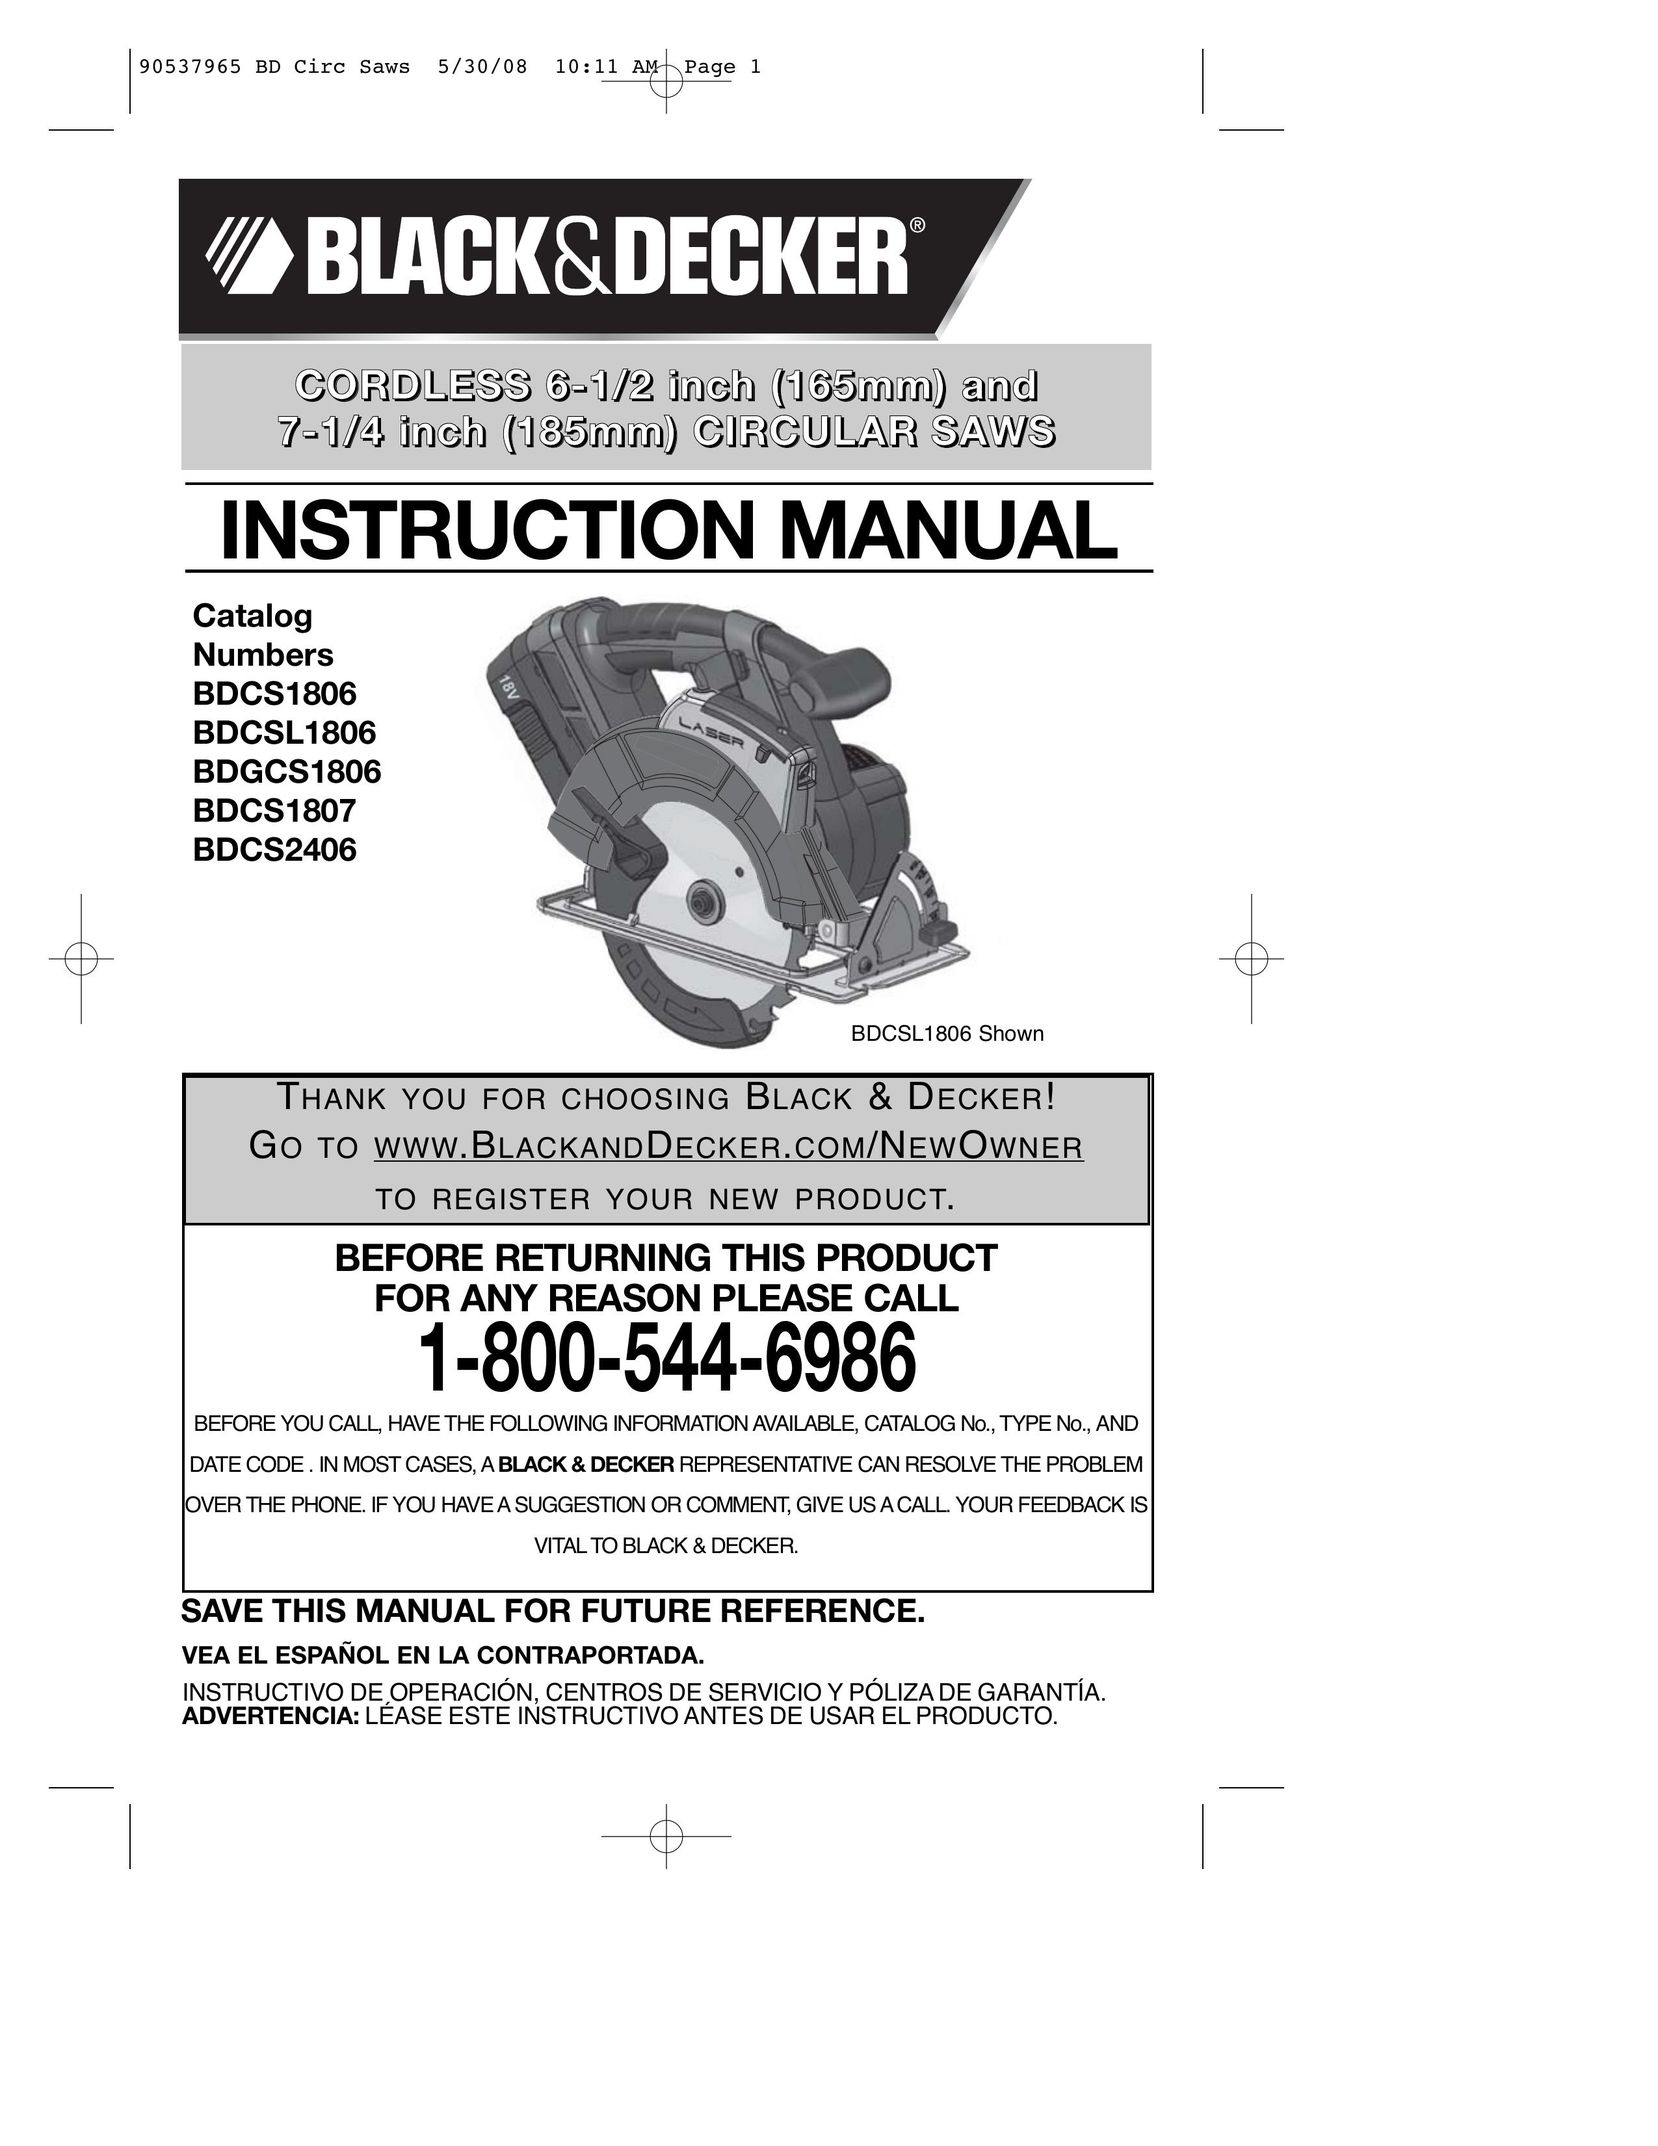 Black & Decker 90537965 Cordless Saw User Manual